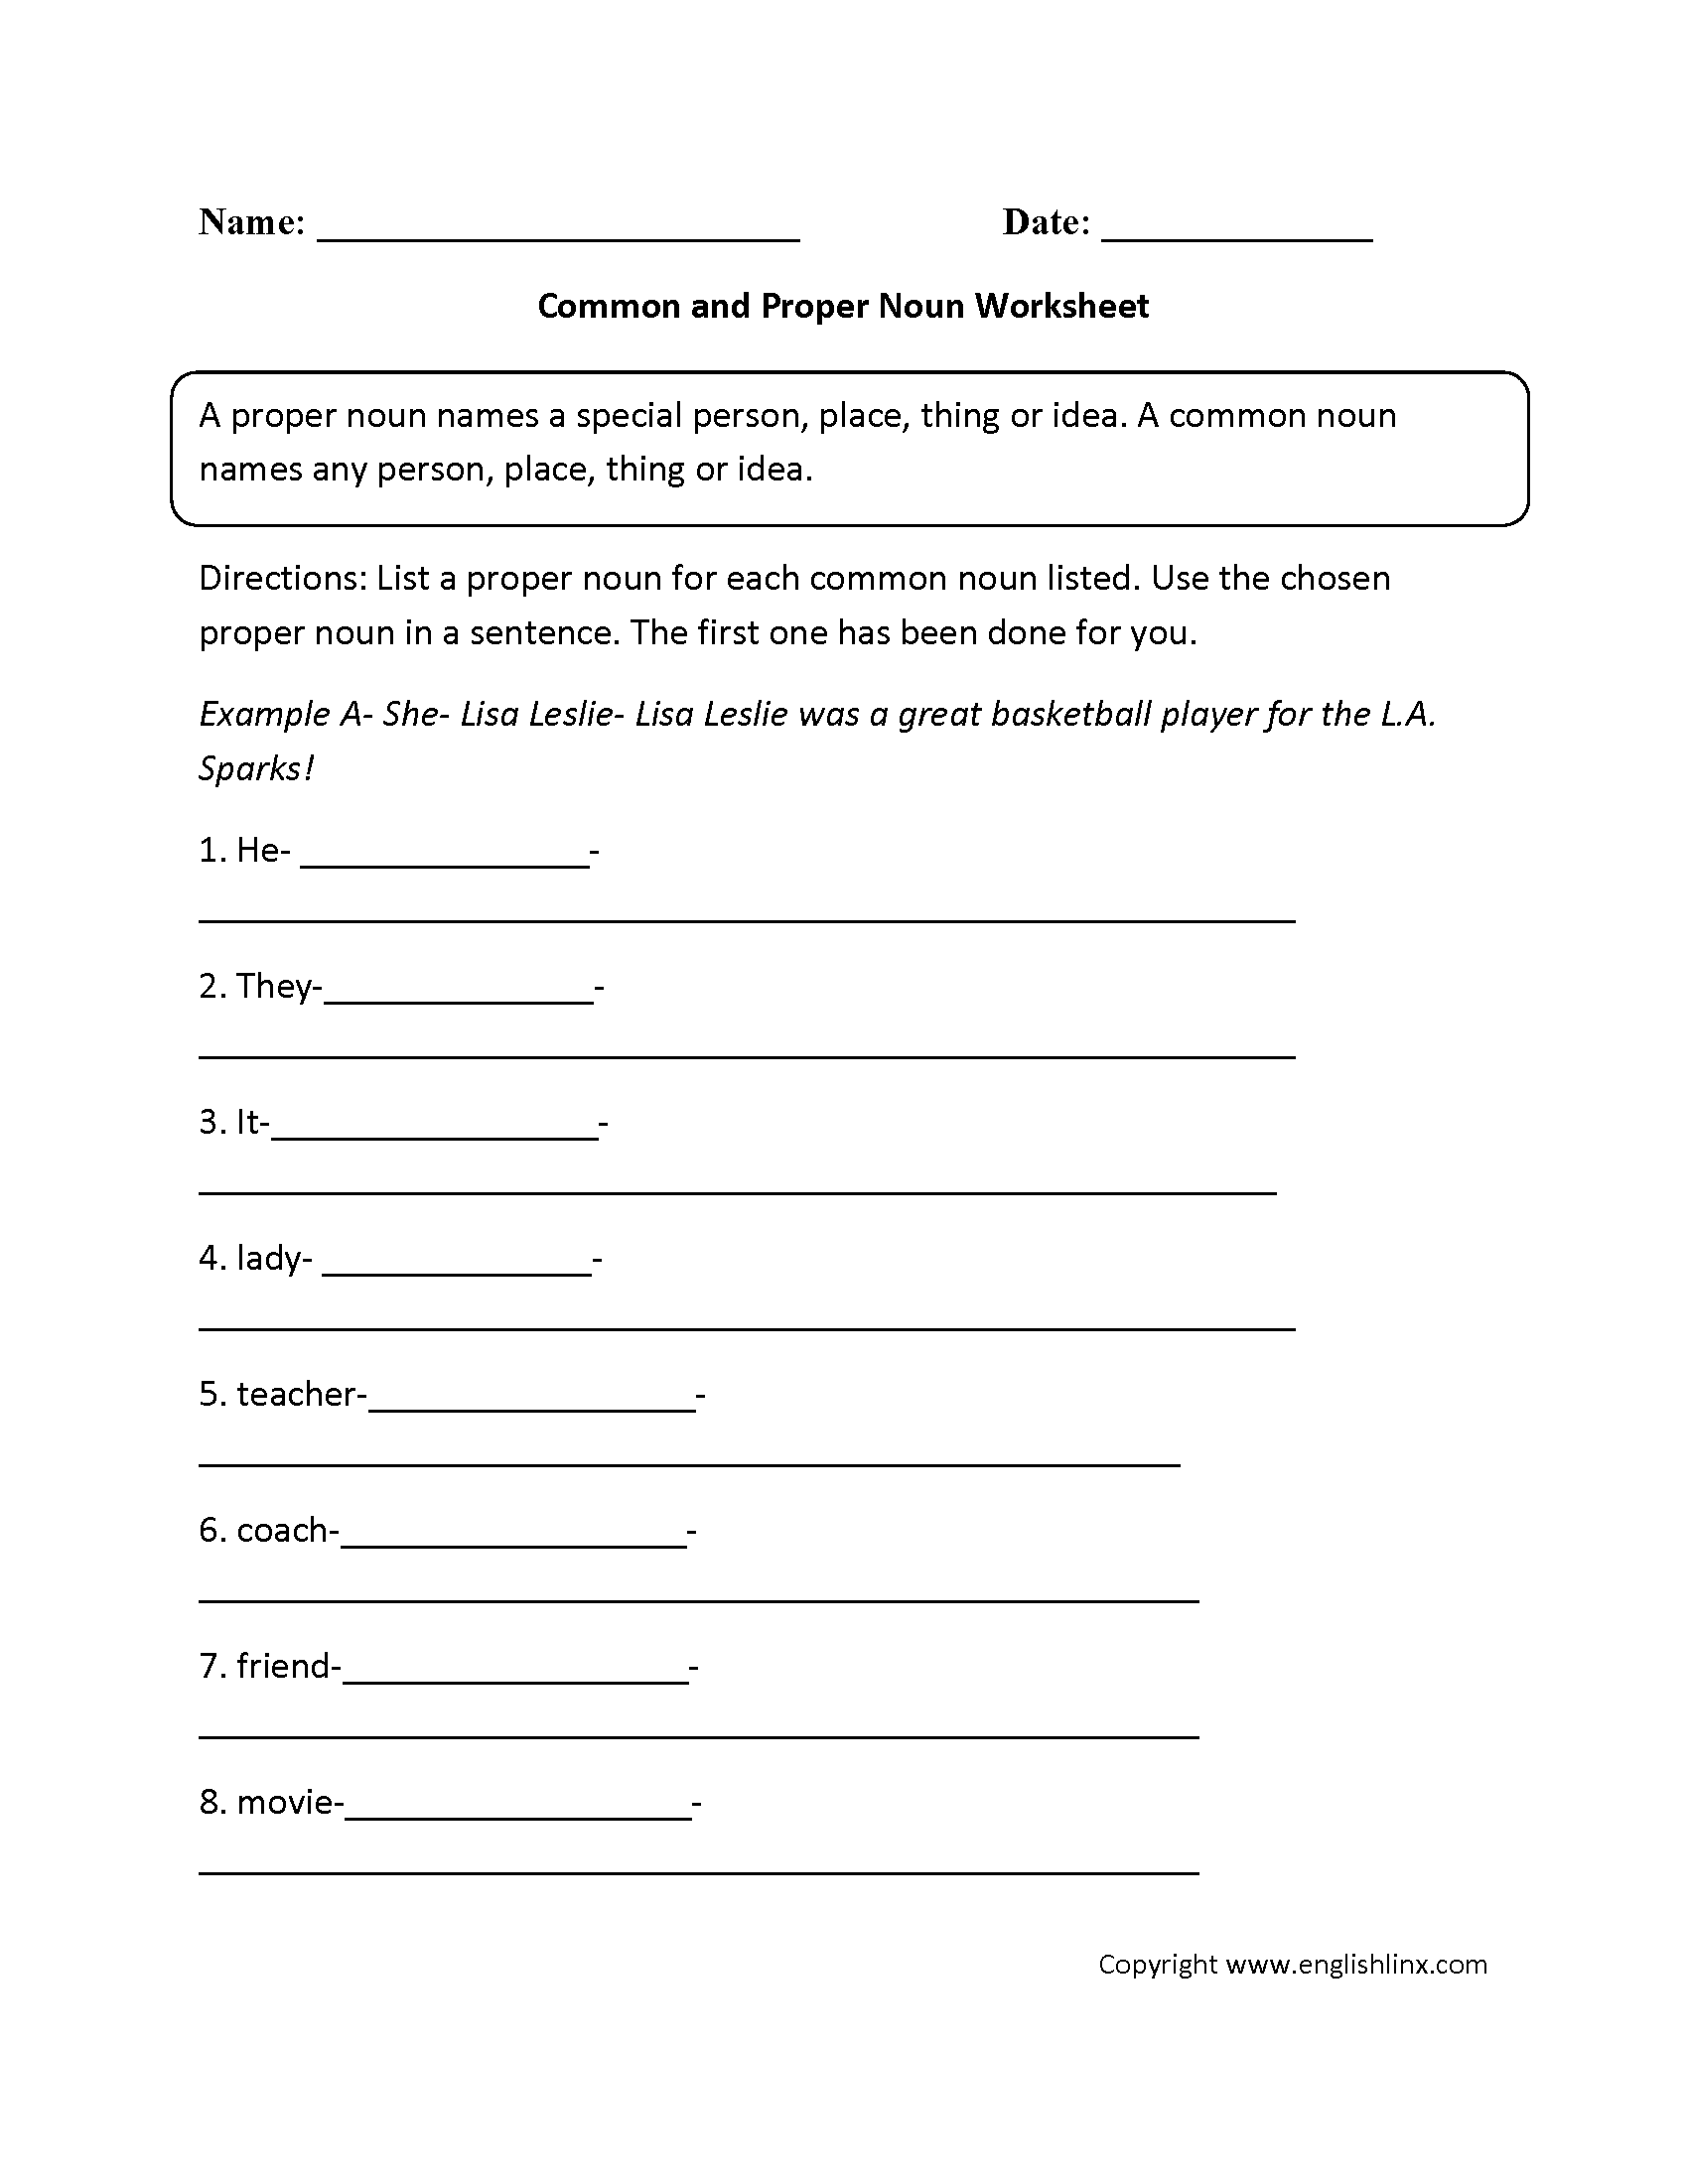 Common and Proper Noun Worksheet